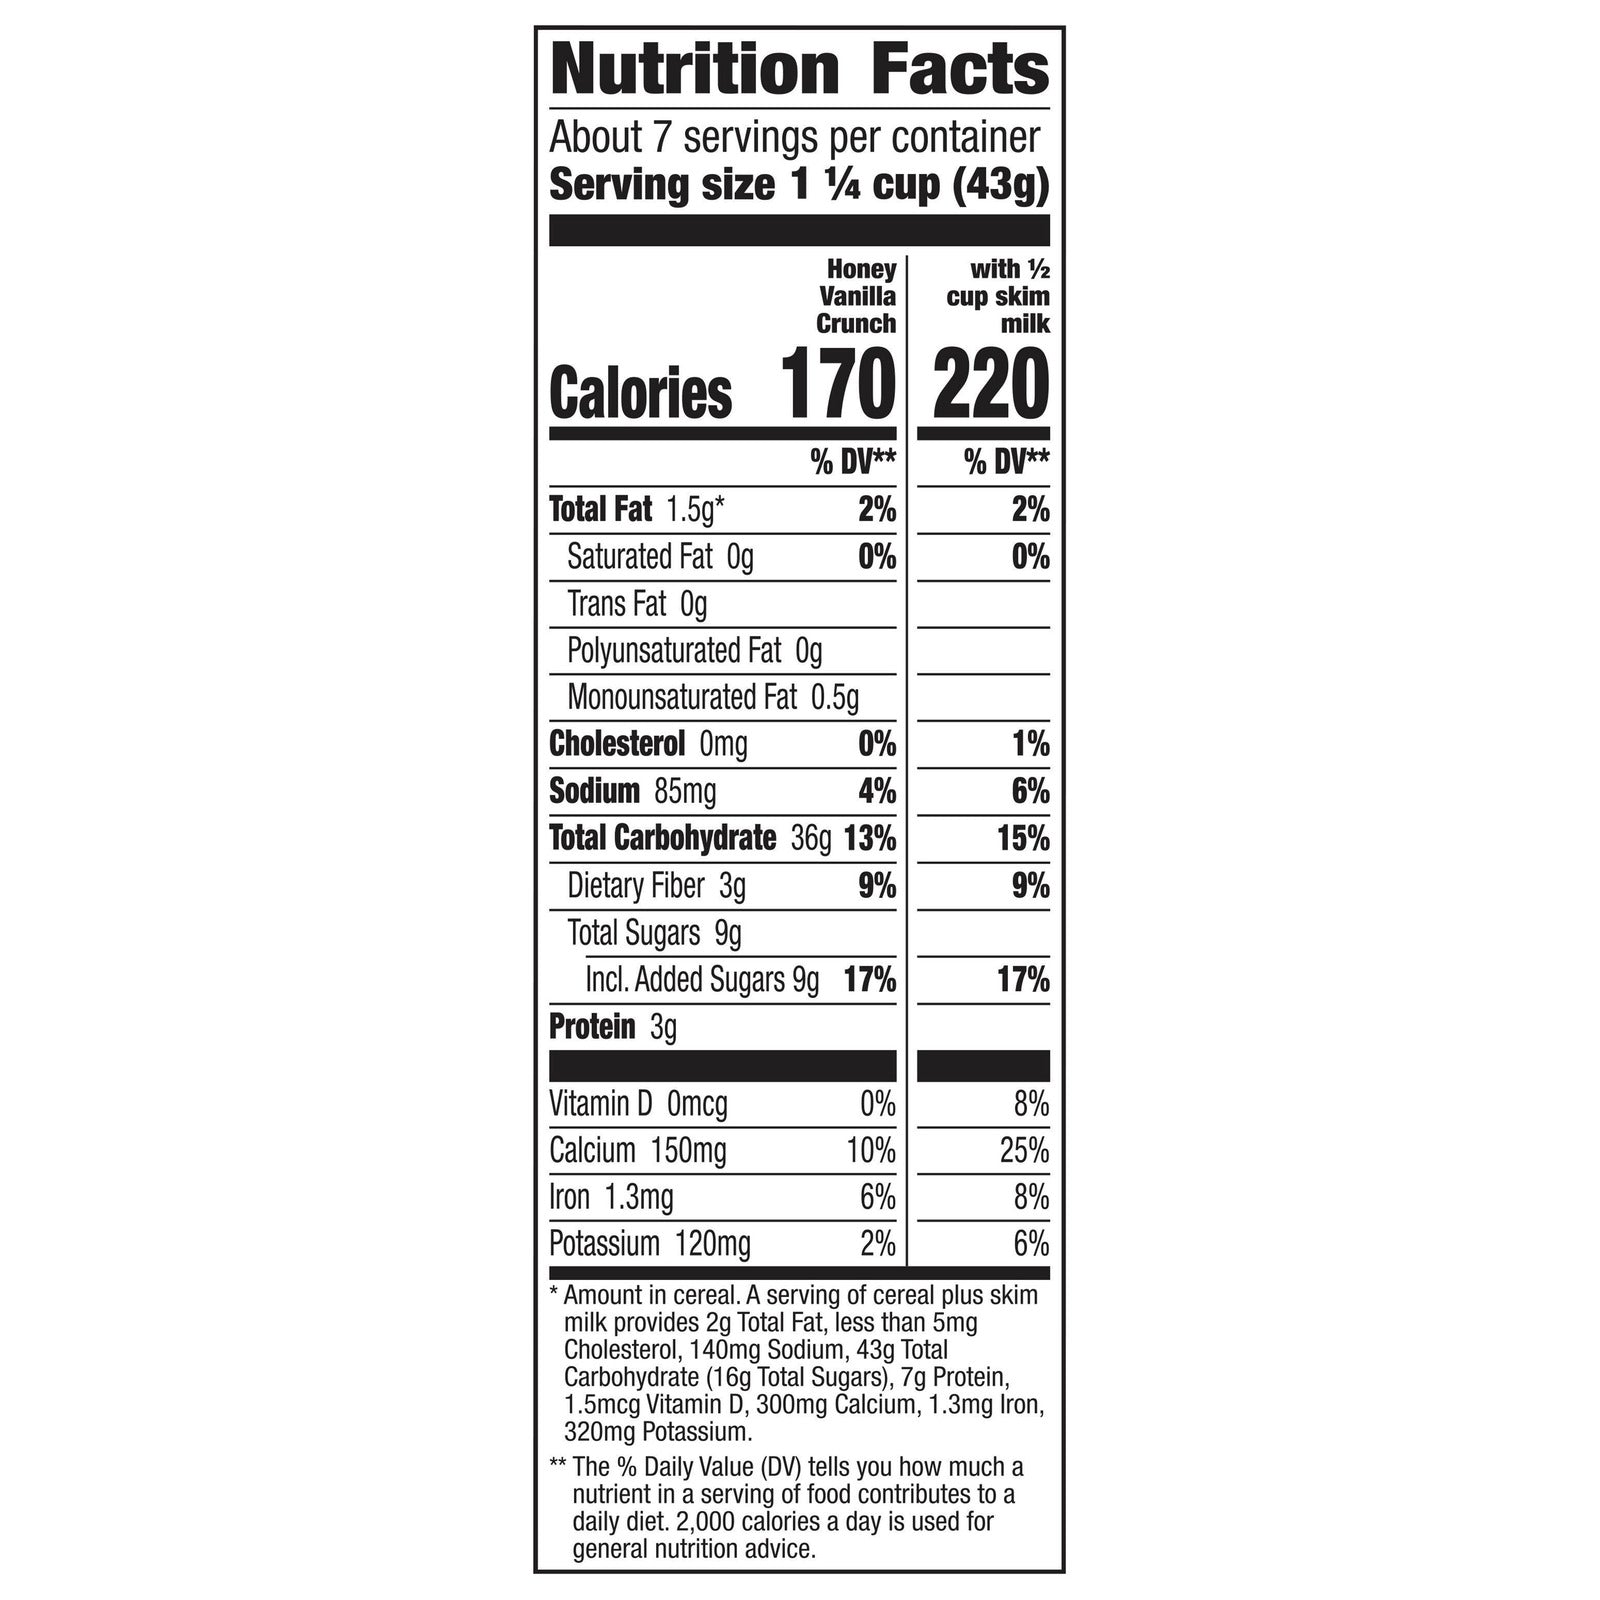 Cascadian Farm - Cereal Hny Vanilla Crunch - Case Of 12 - 10.5 Oz